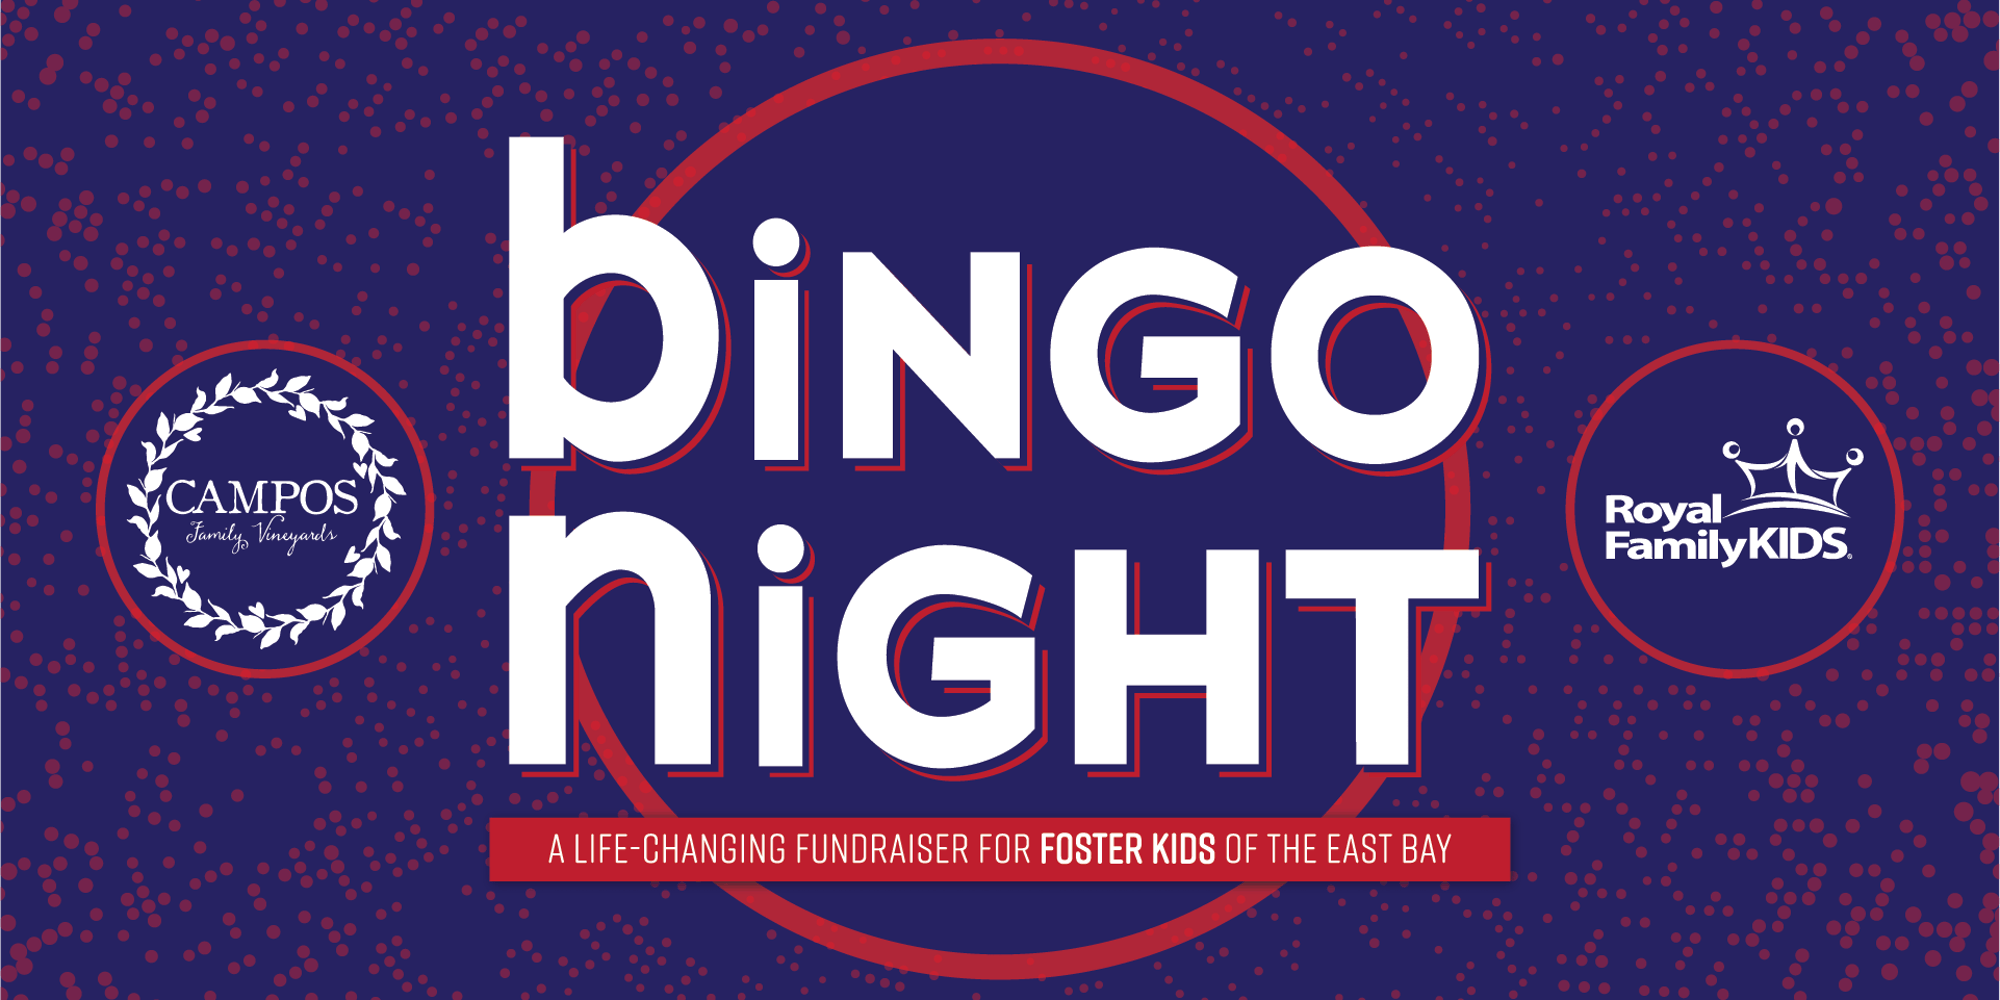 Bingo Night Fundraiser - Campos Family Vineyards